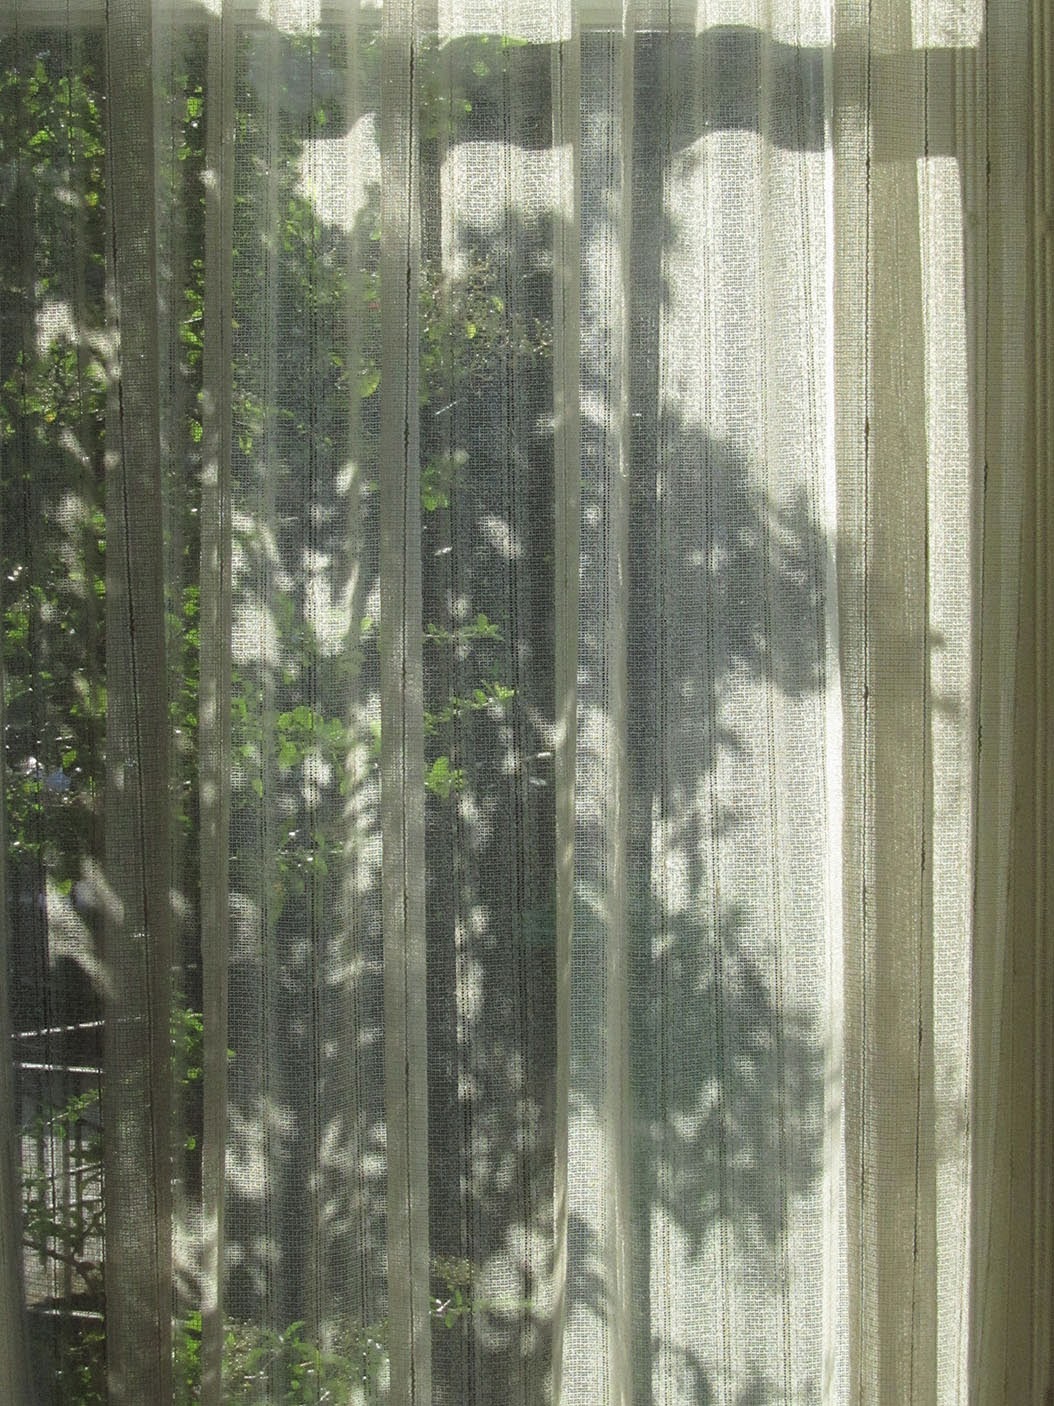 shadow of a bush in the window